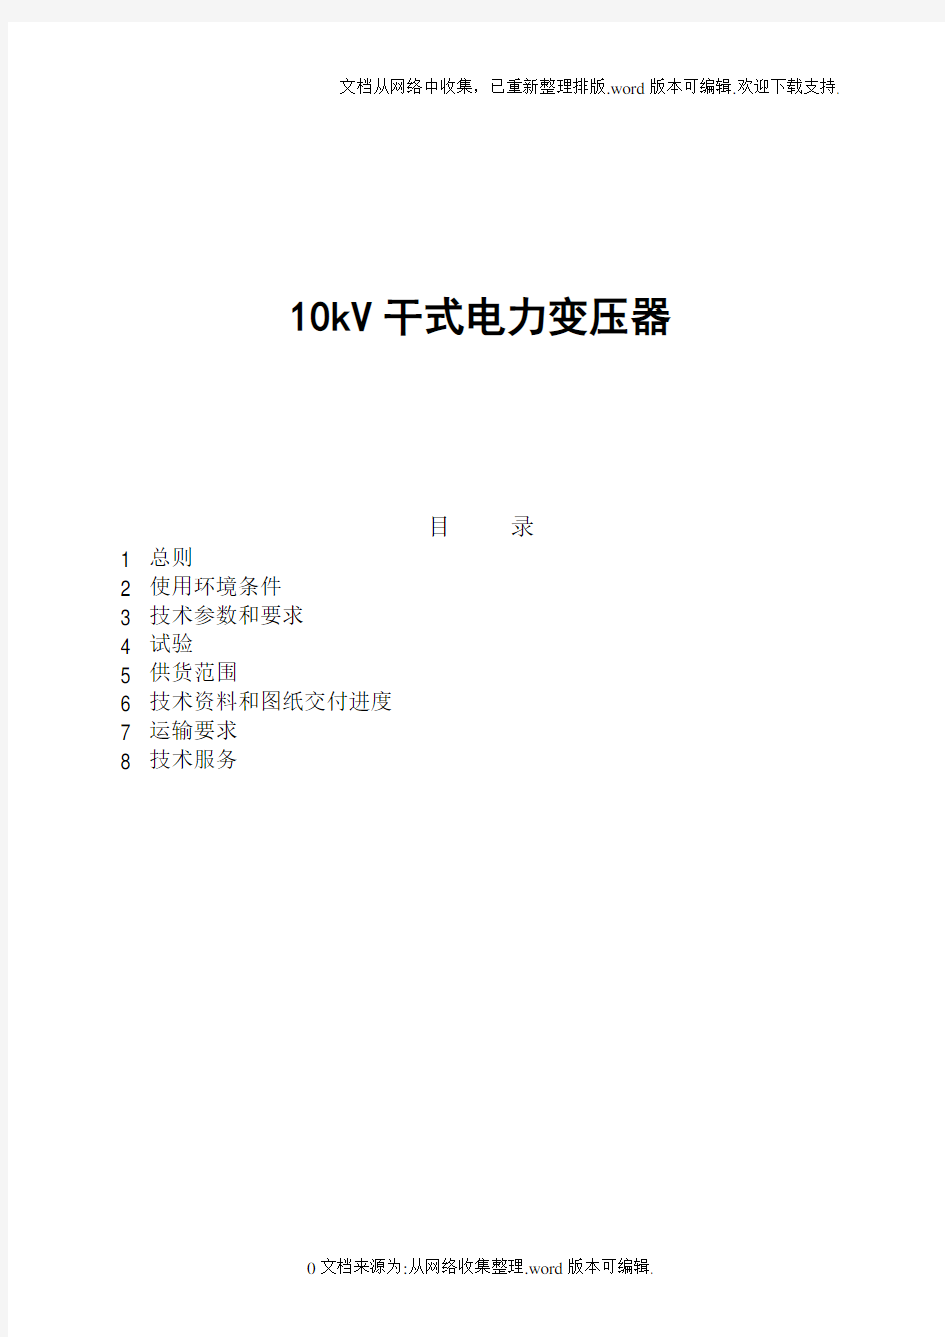 10kV干式变压器技术规范书